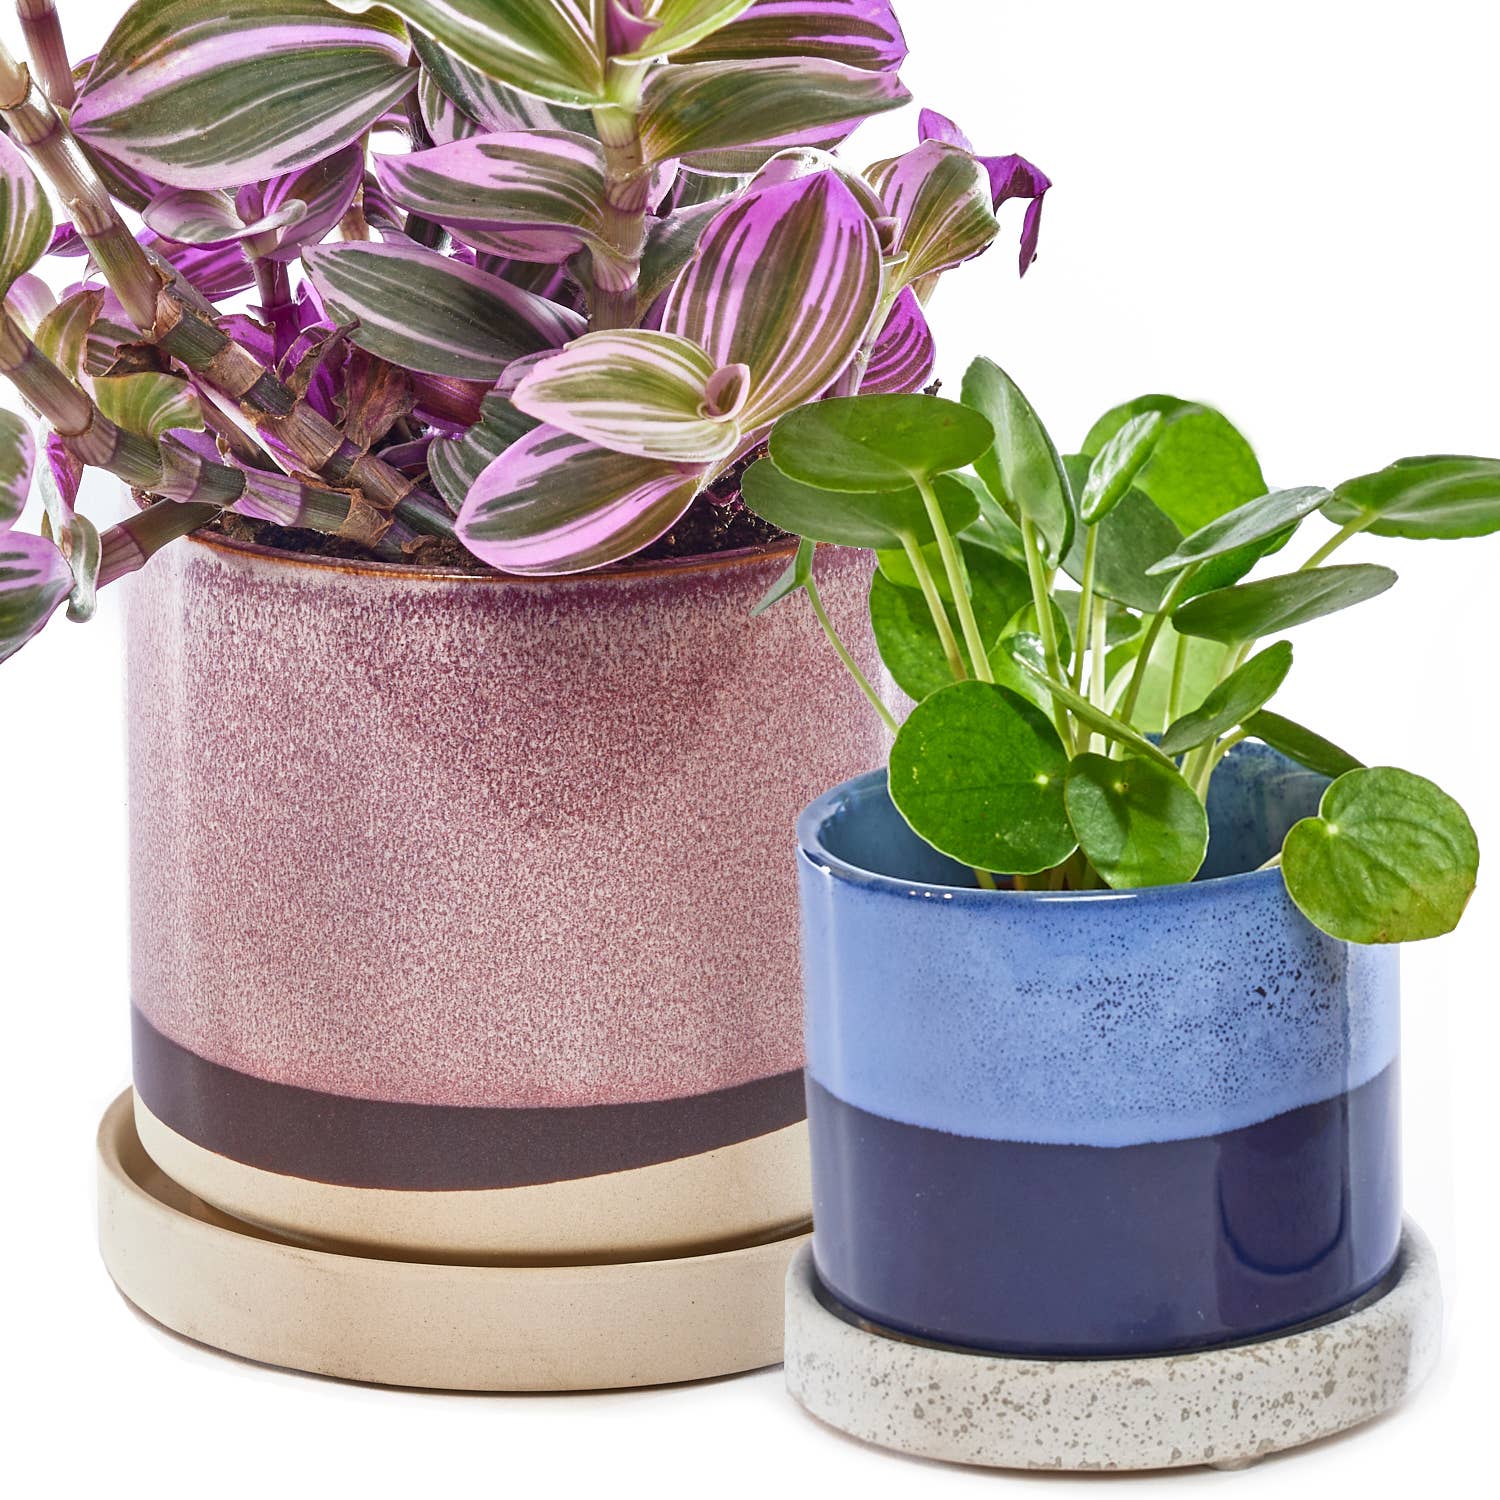 Chive - Minute Ceramic Plant Pots Indoor: Cobalt Blue / 5"